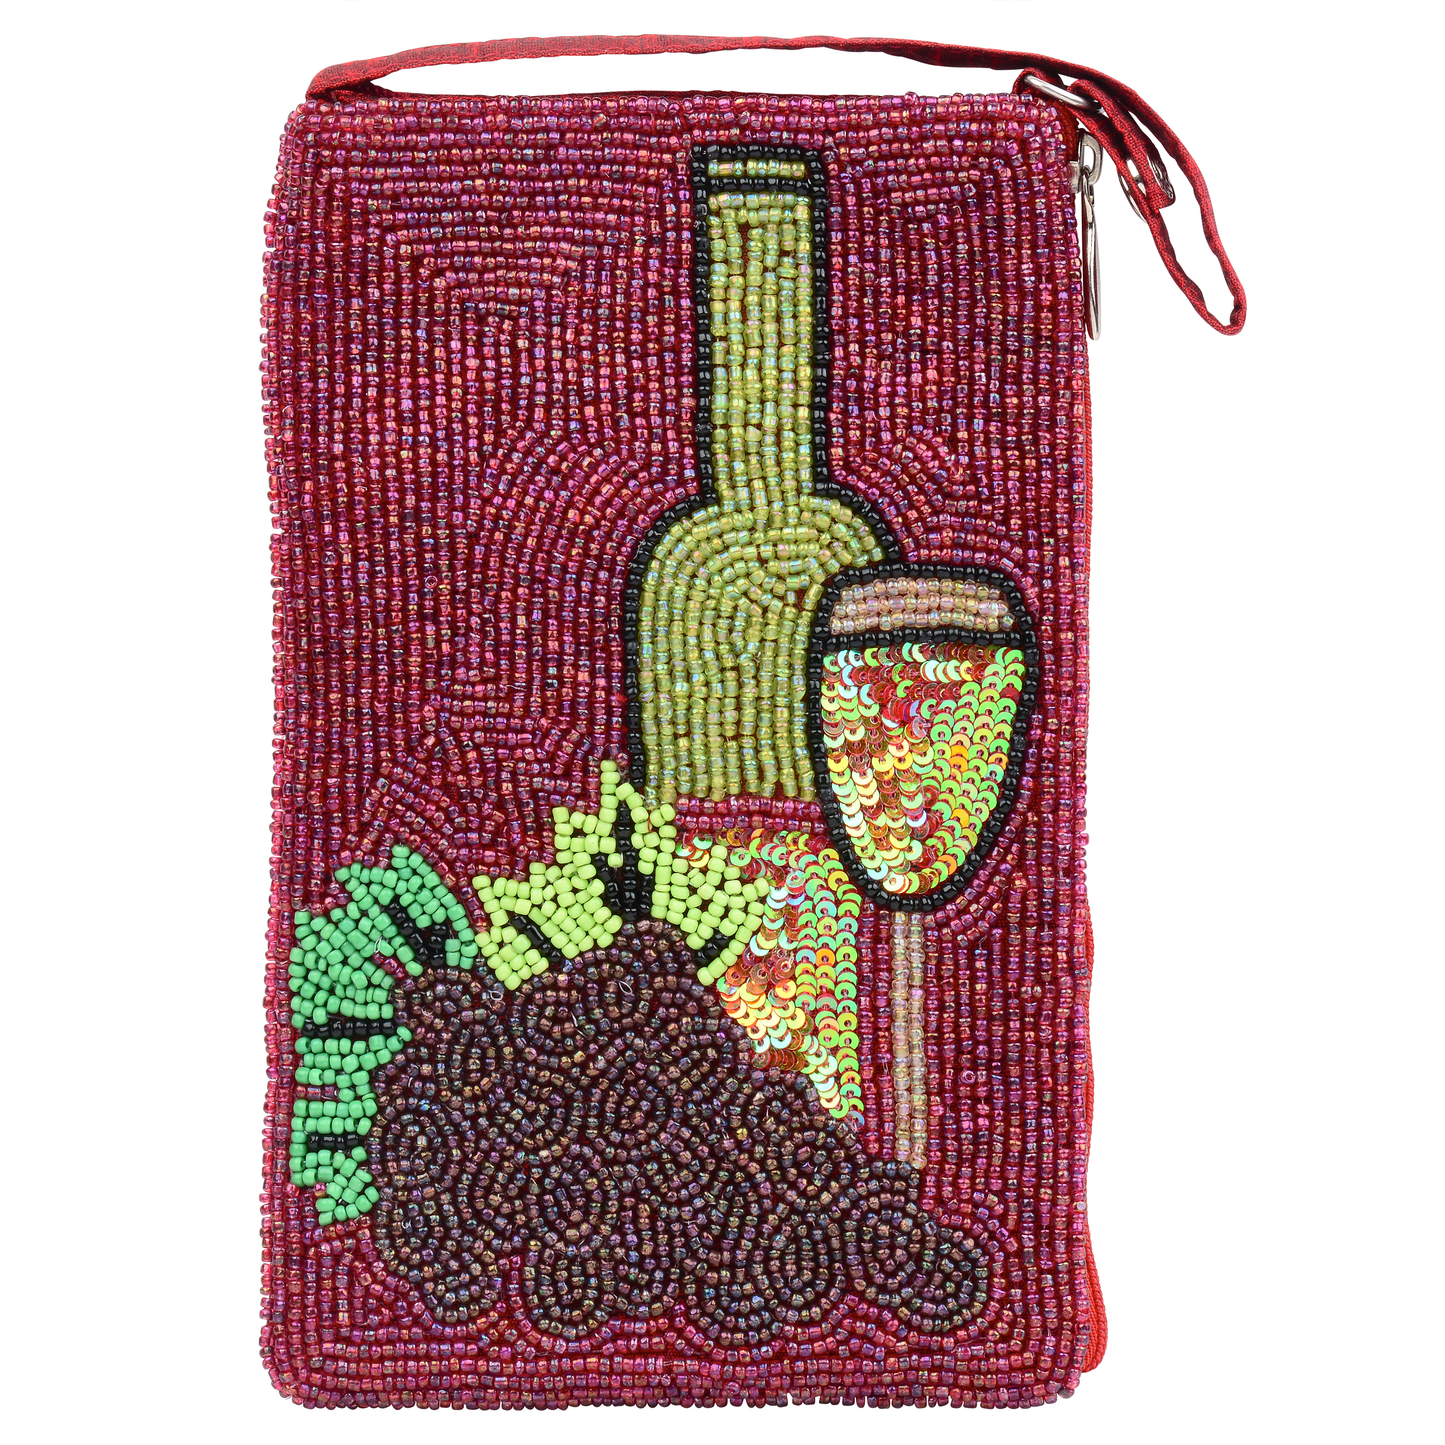 Red Wine Club Bag